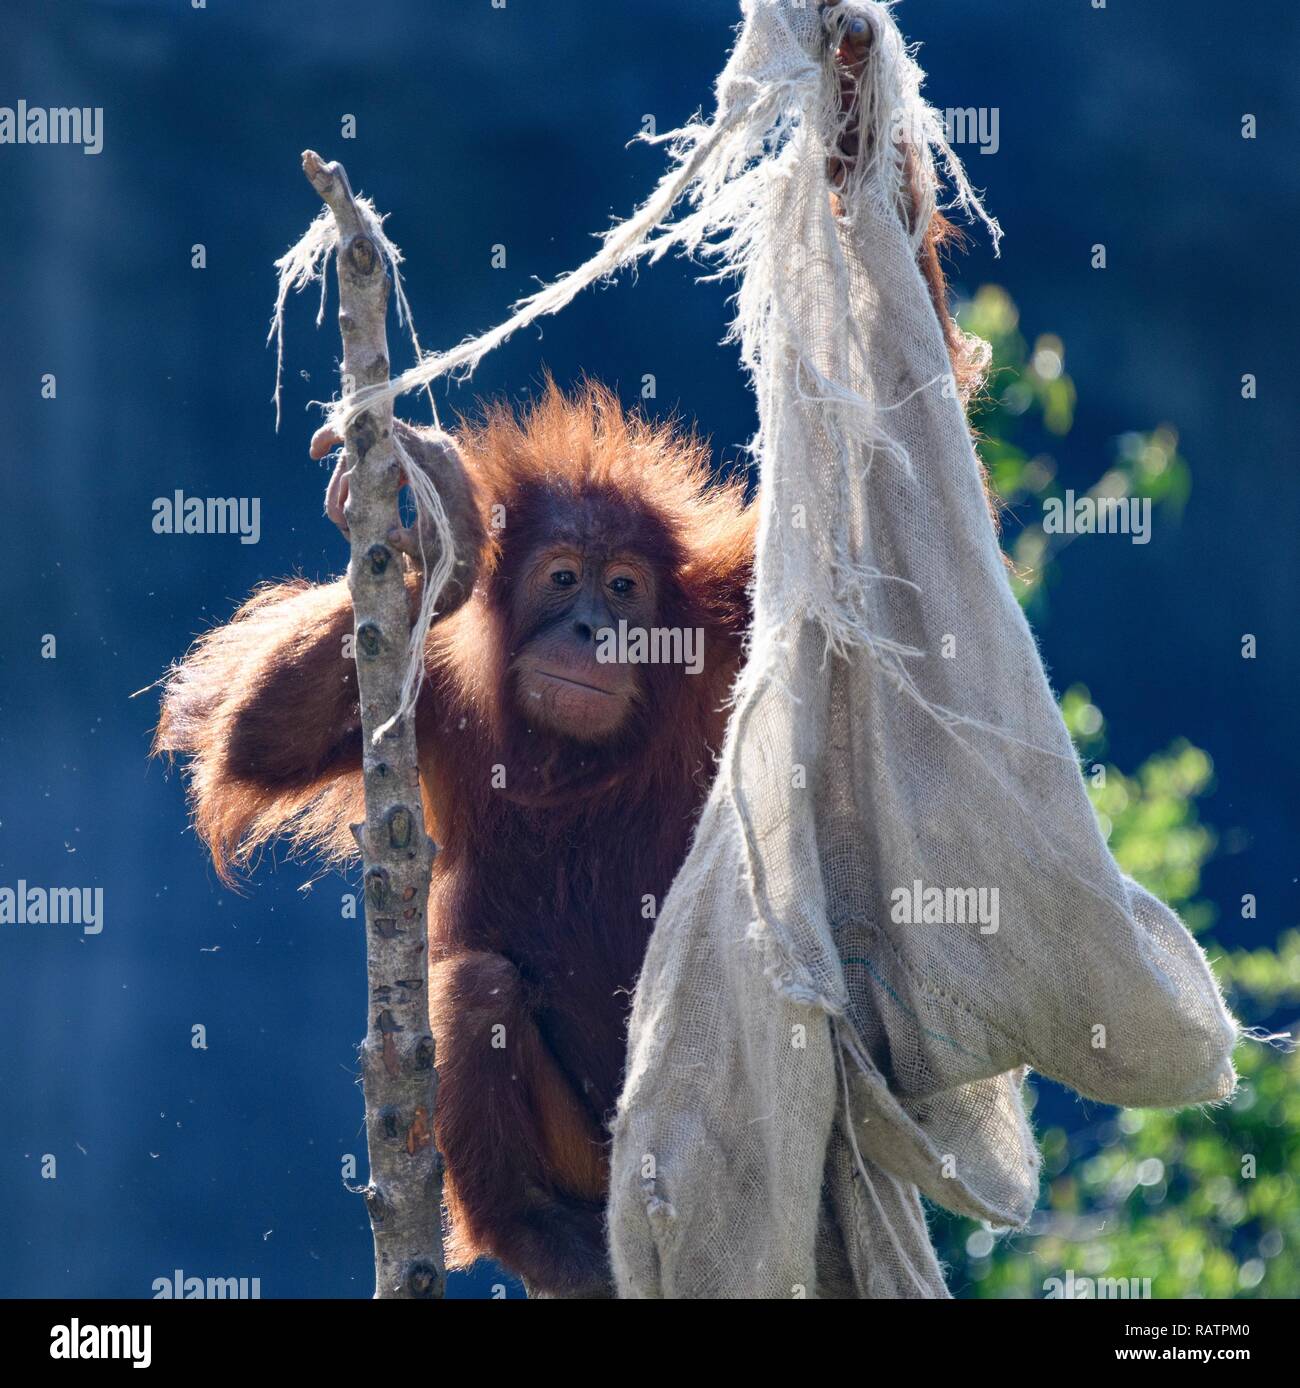 Orangután cerrar Foto de stock